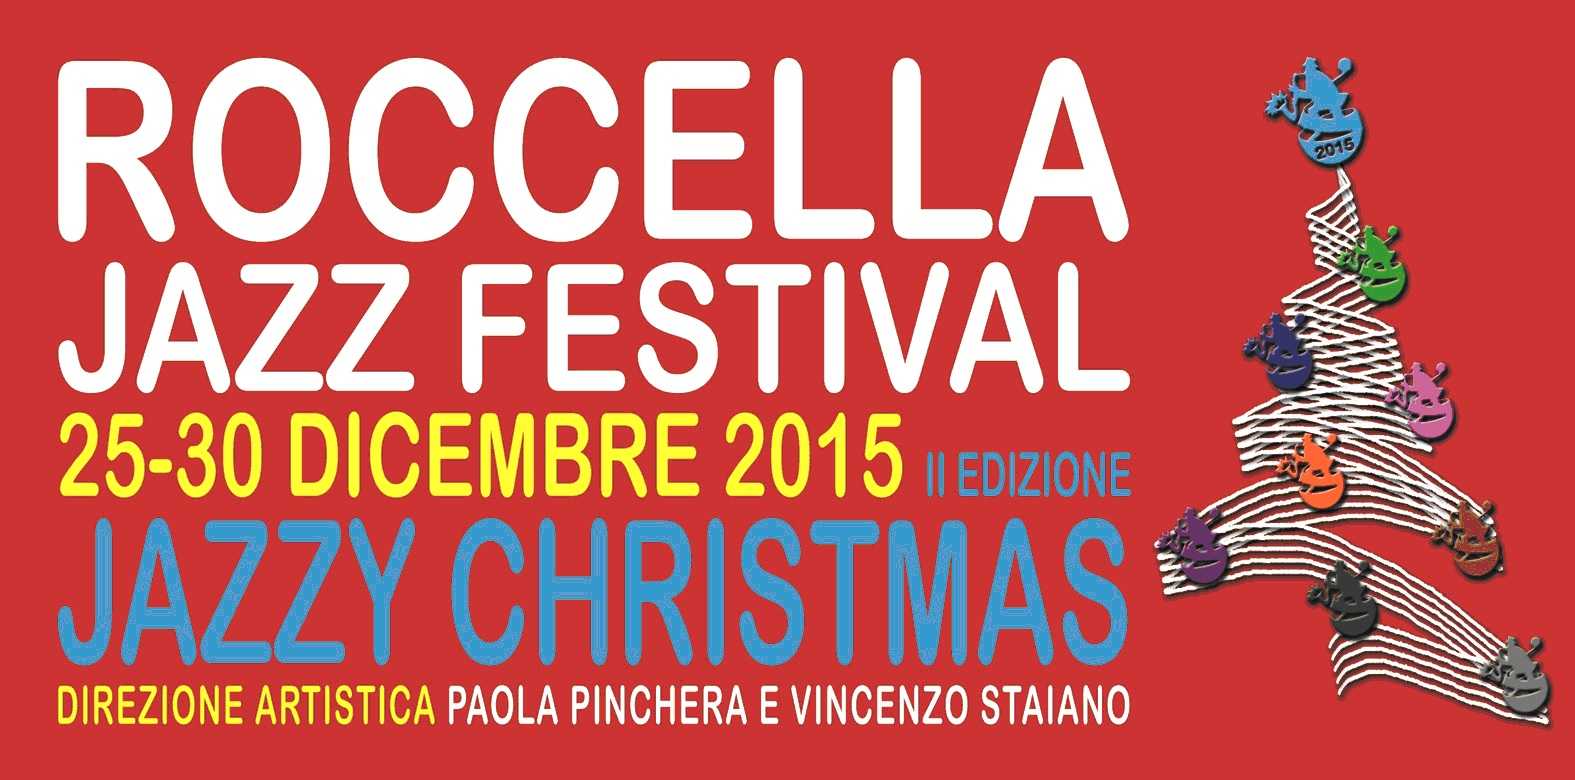 Roccella Jazz Festival - Jazzy Christmas